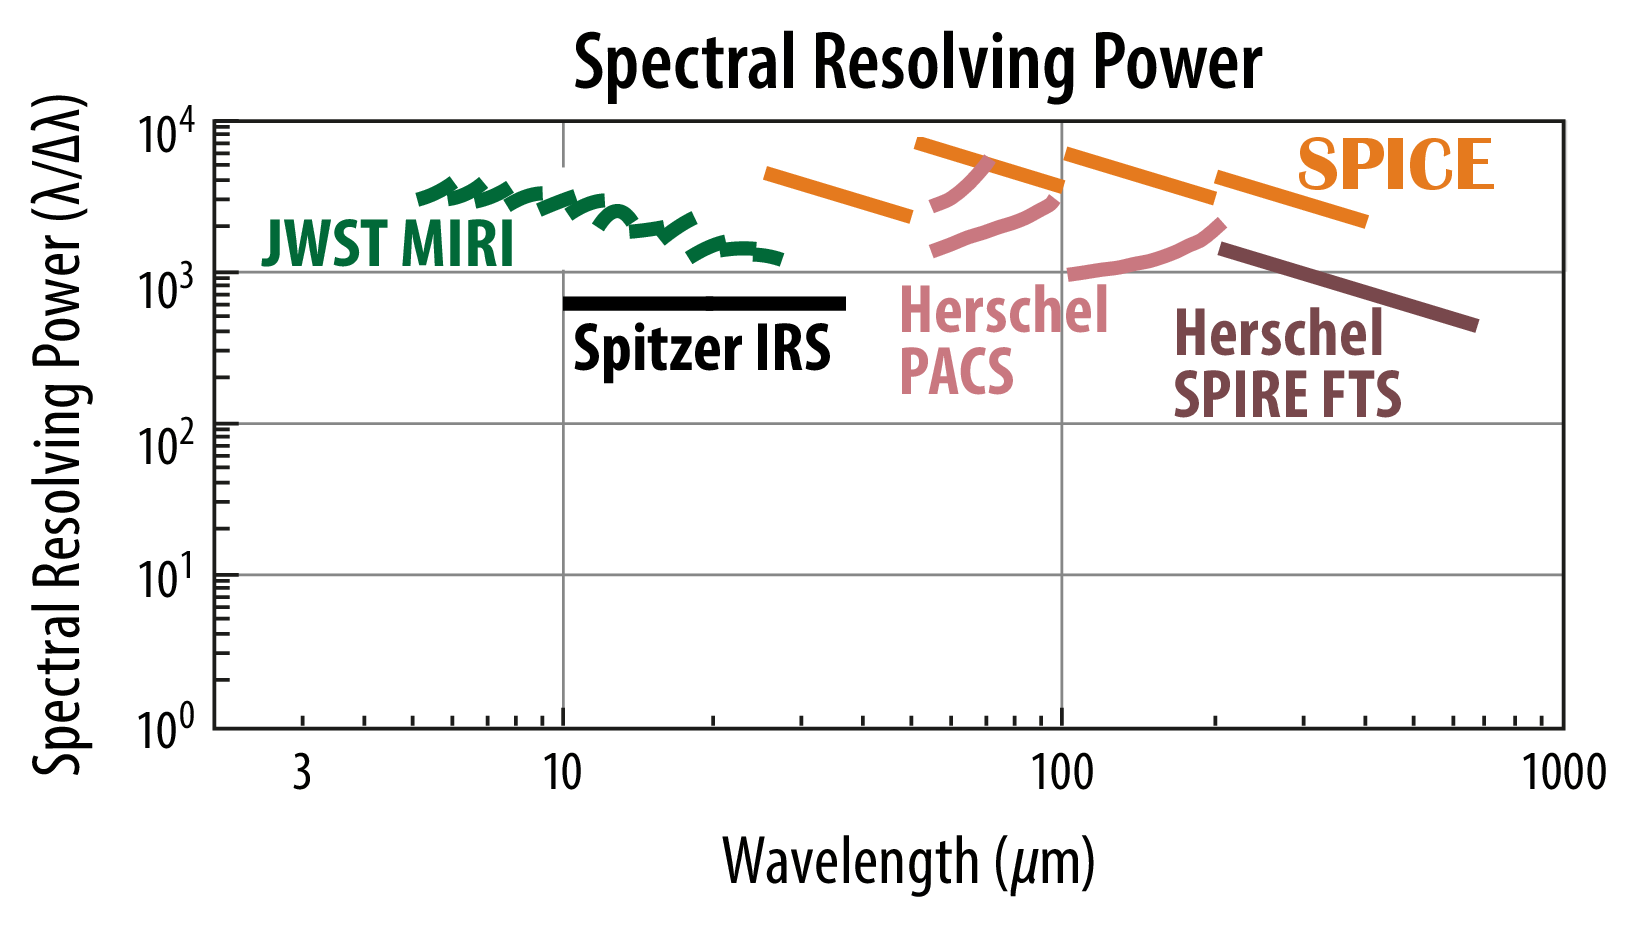 Spectral Resolving Power graph